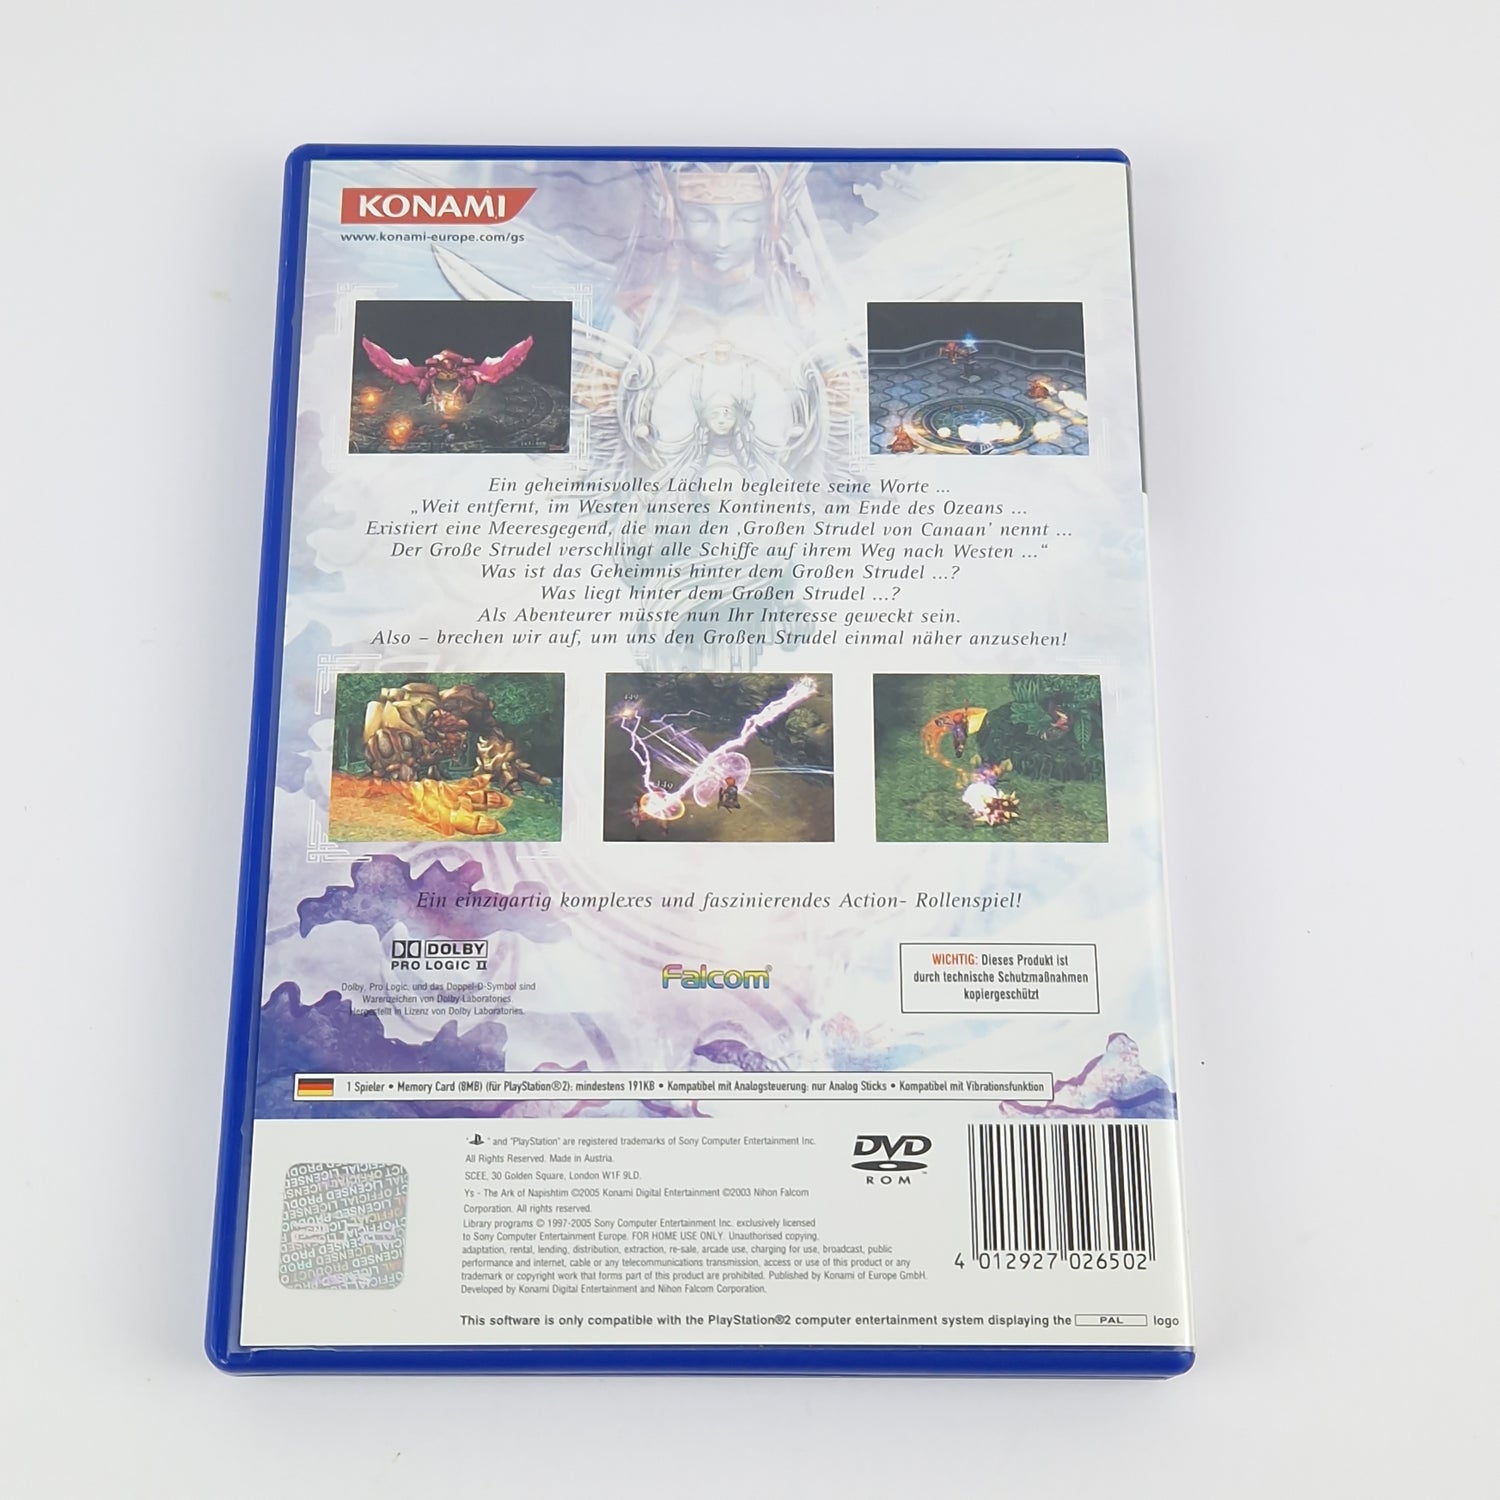 Sony Playstation 2 Game: Ys The Ark of Napishtim - OVP Instructions PAL PS2 Game